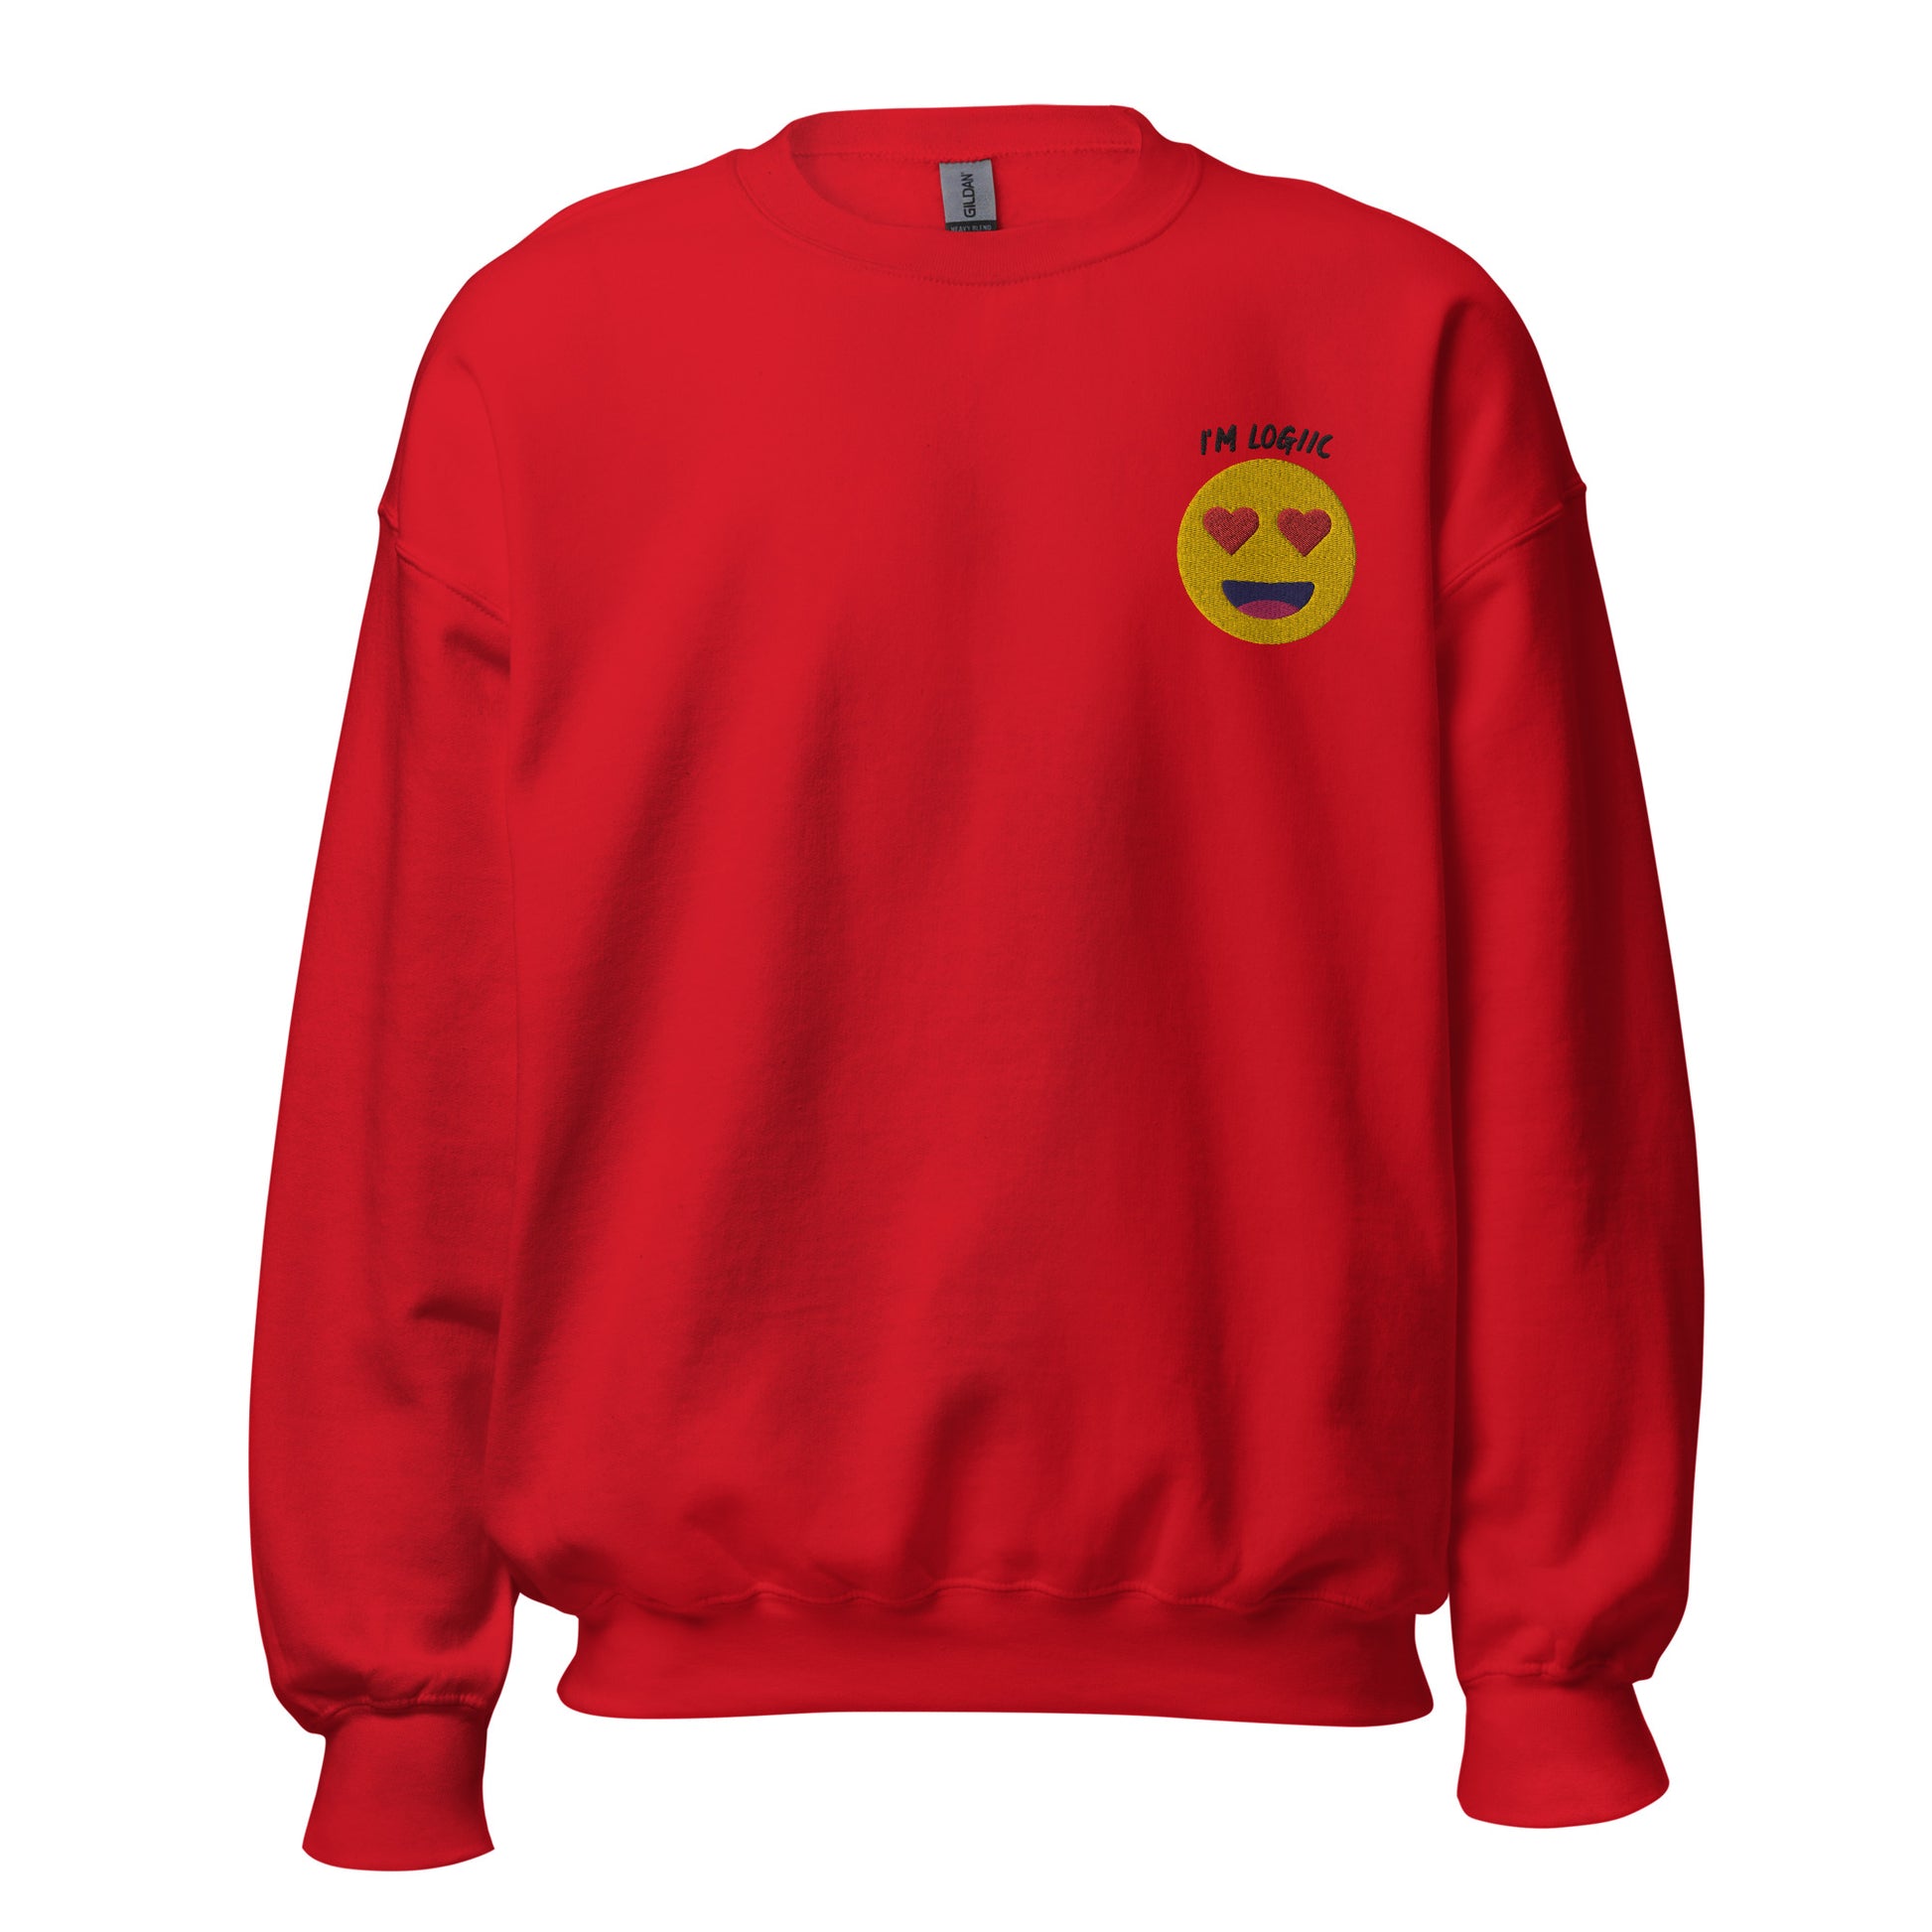 Heart Eyes Emoji Unisex Sweatshirt - Red / S